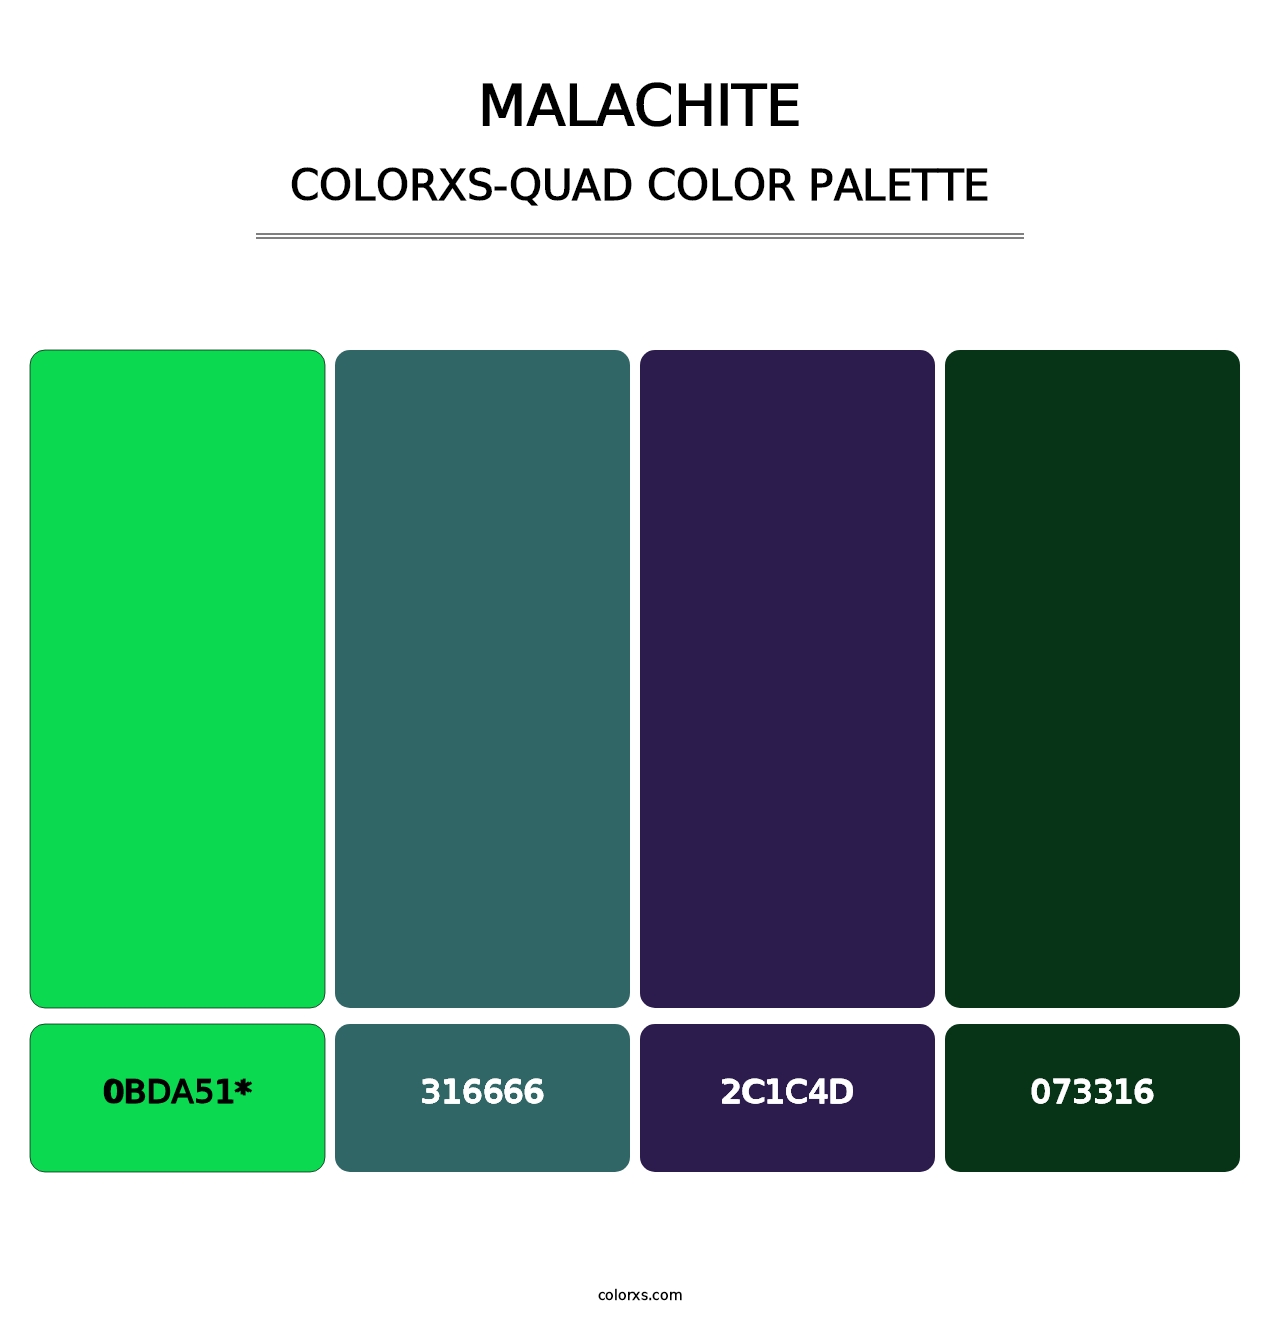 Malachite - Colorxs Quad Palette